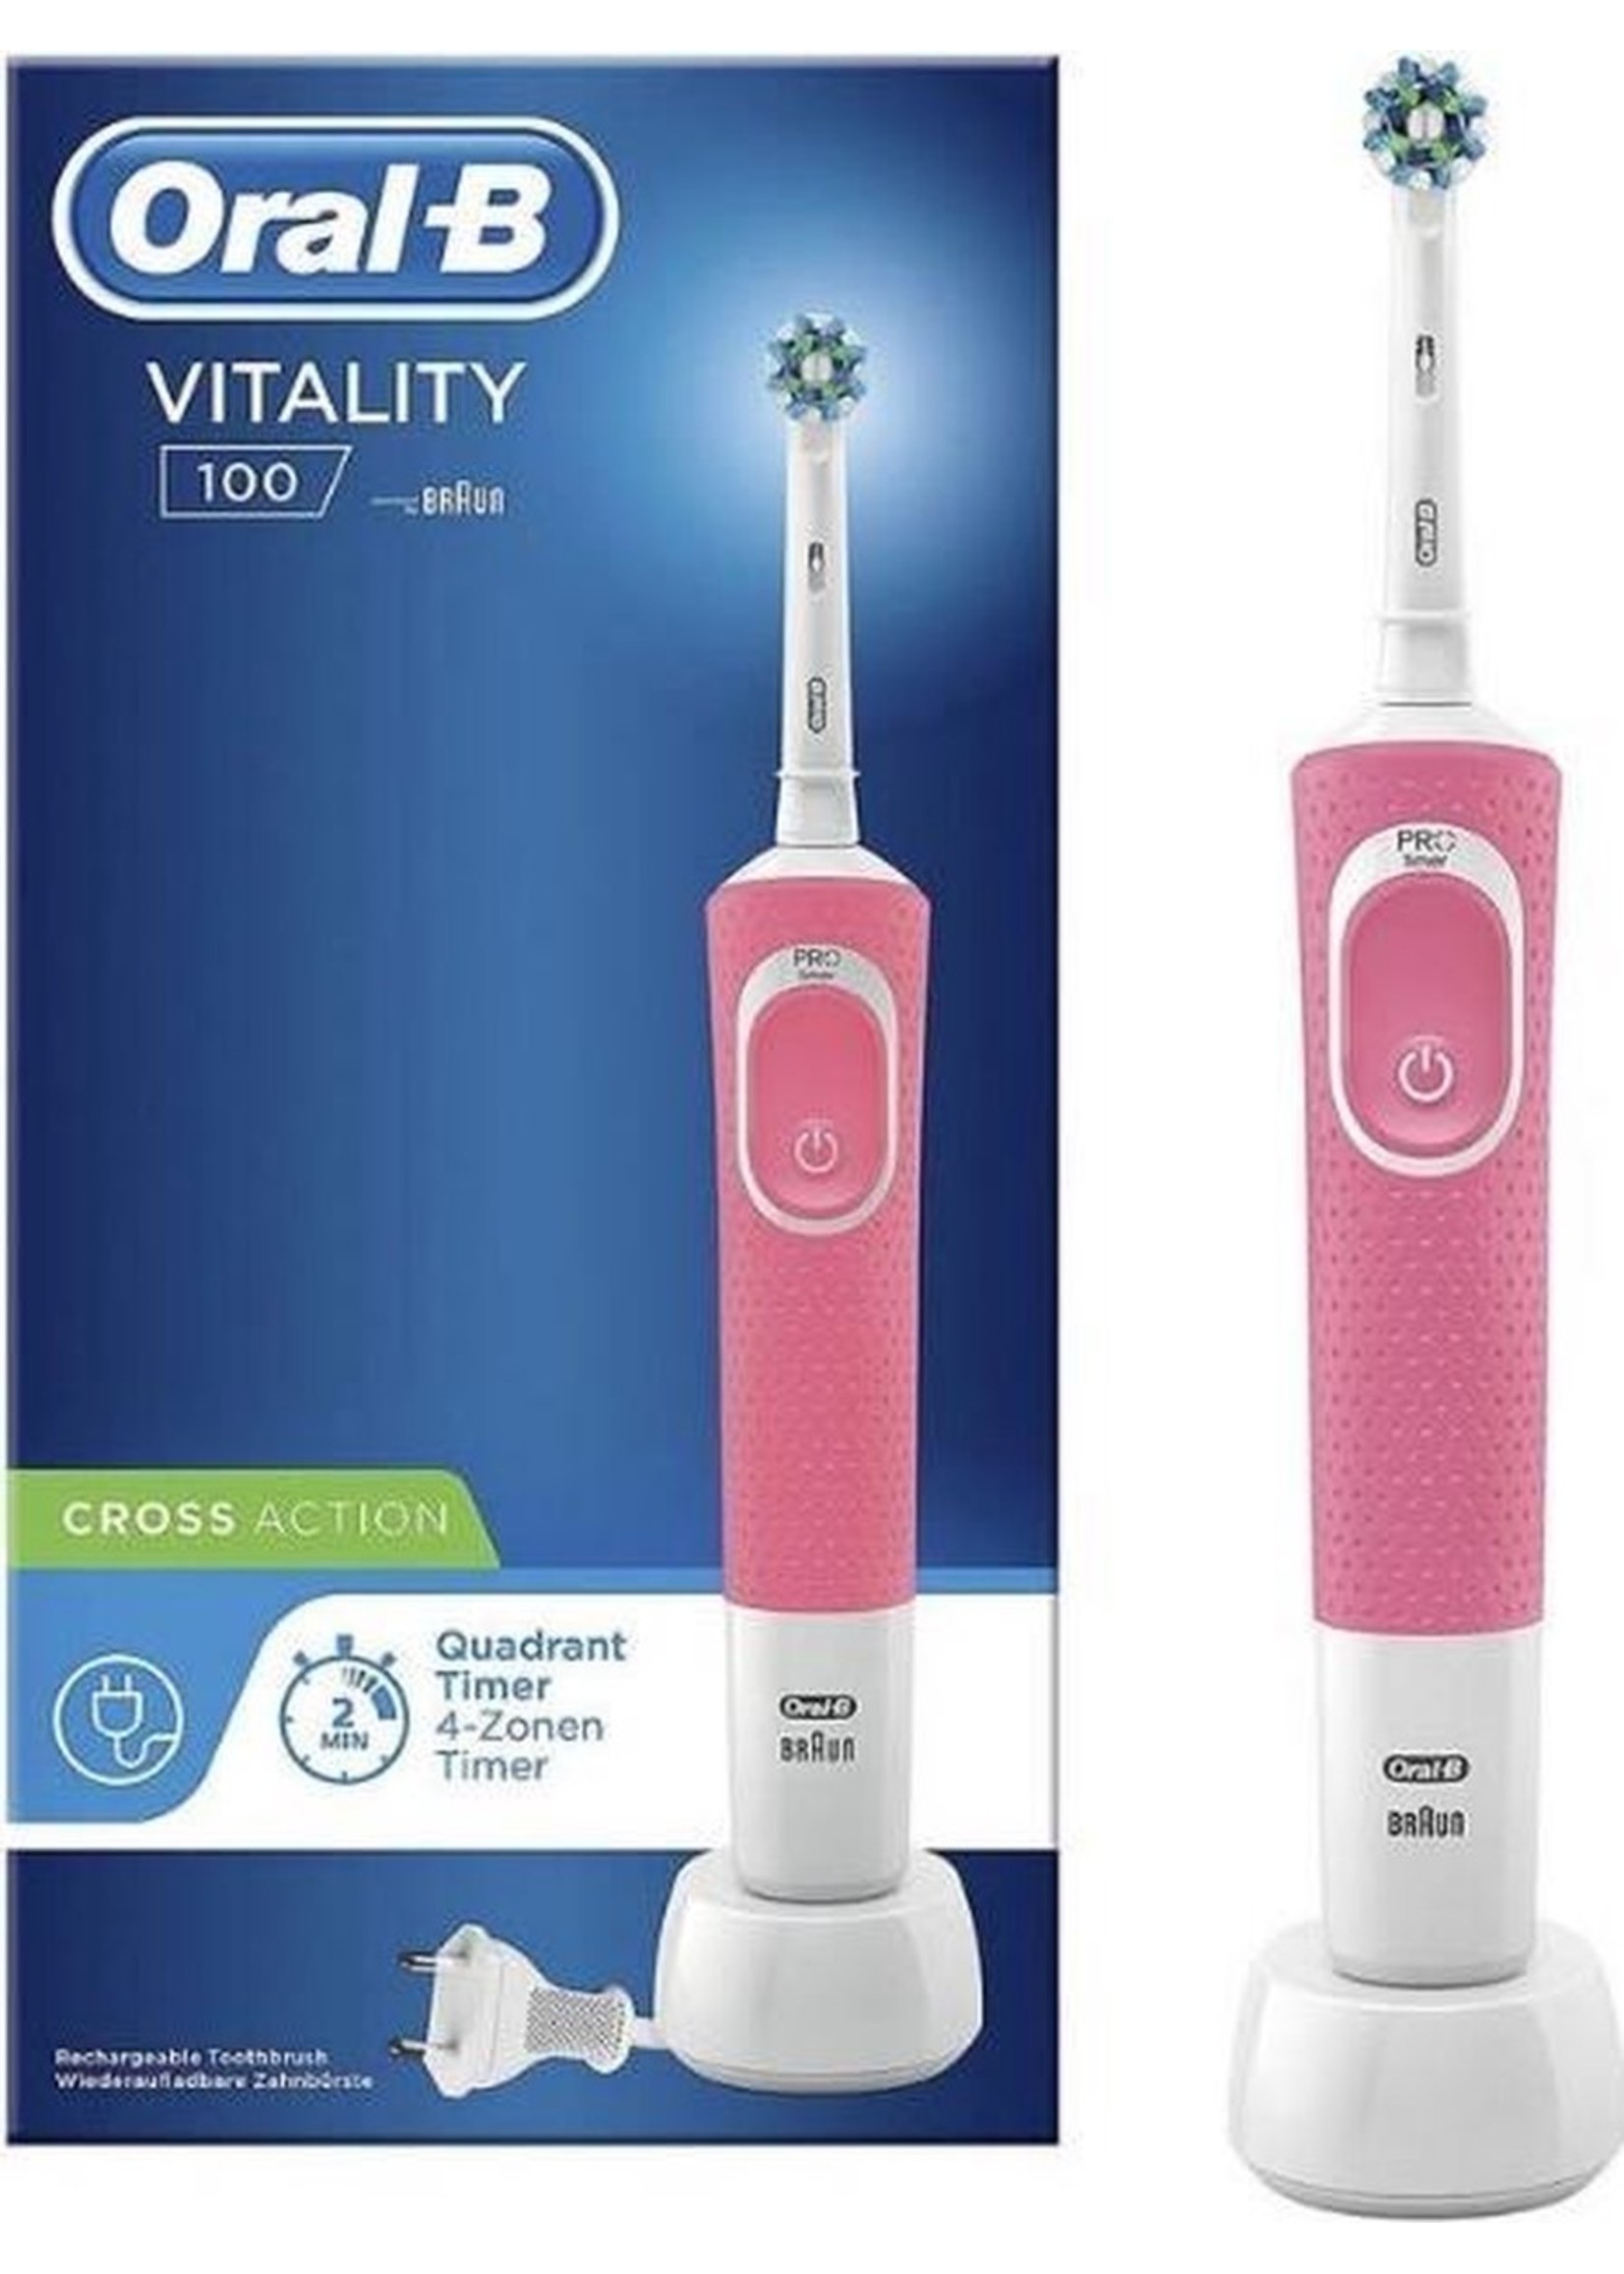 Oral-B Oral-B Vitality 100 CrossAction - Elektrische Tandenborstel - Roze